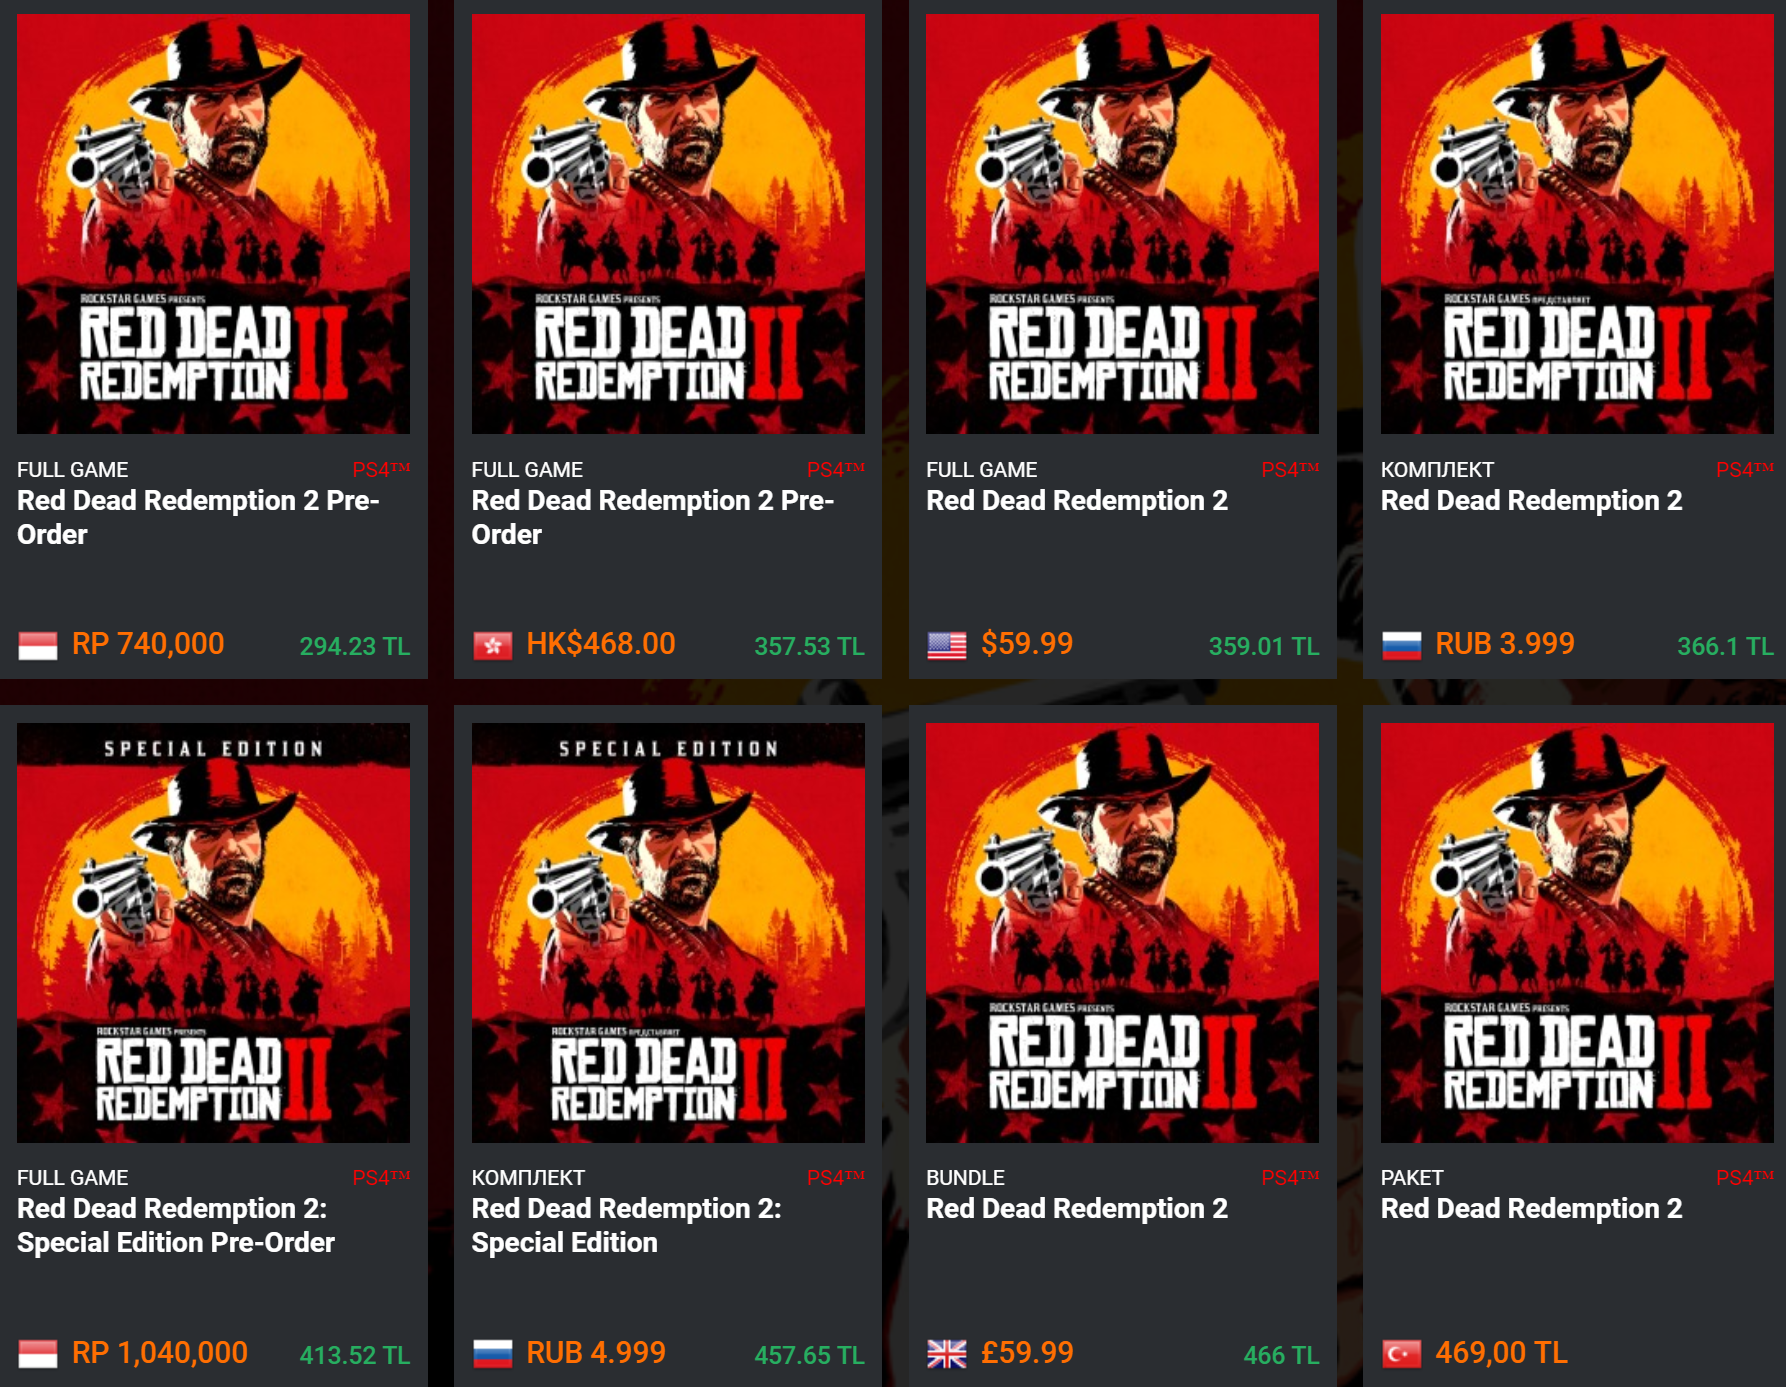 Red Dead Redemption 2'nin Fiyatı da 469,00 TL Oldu